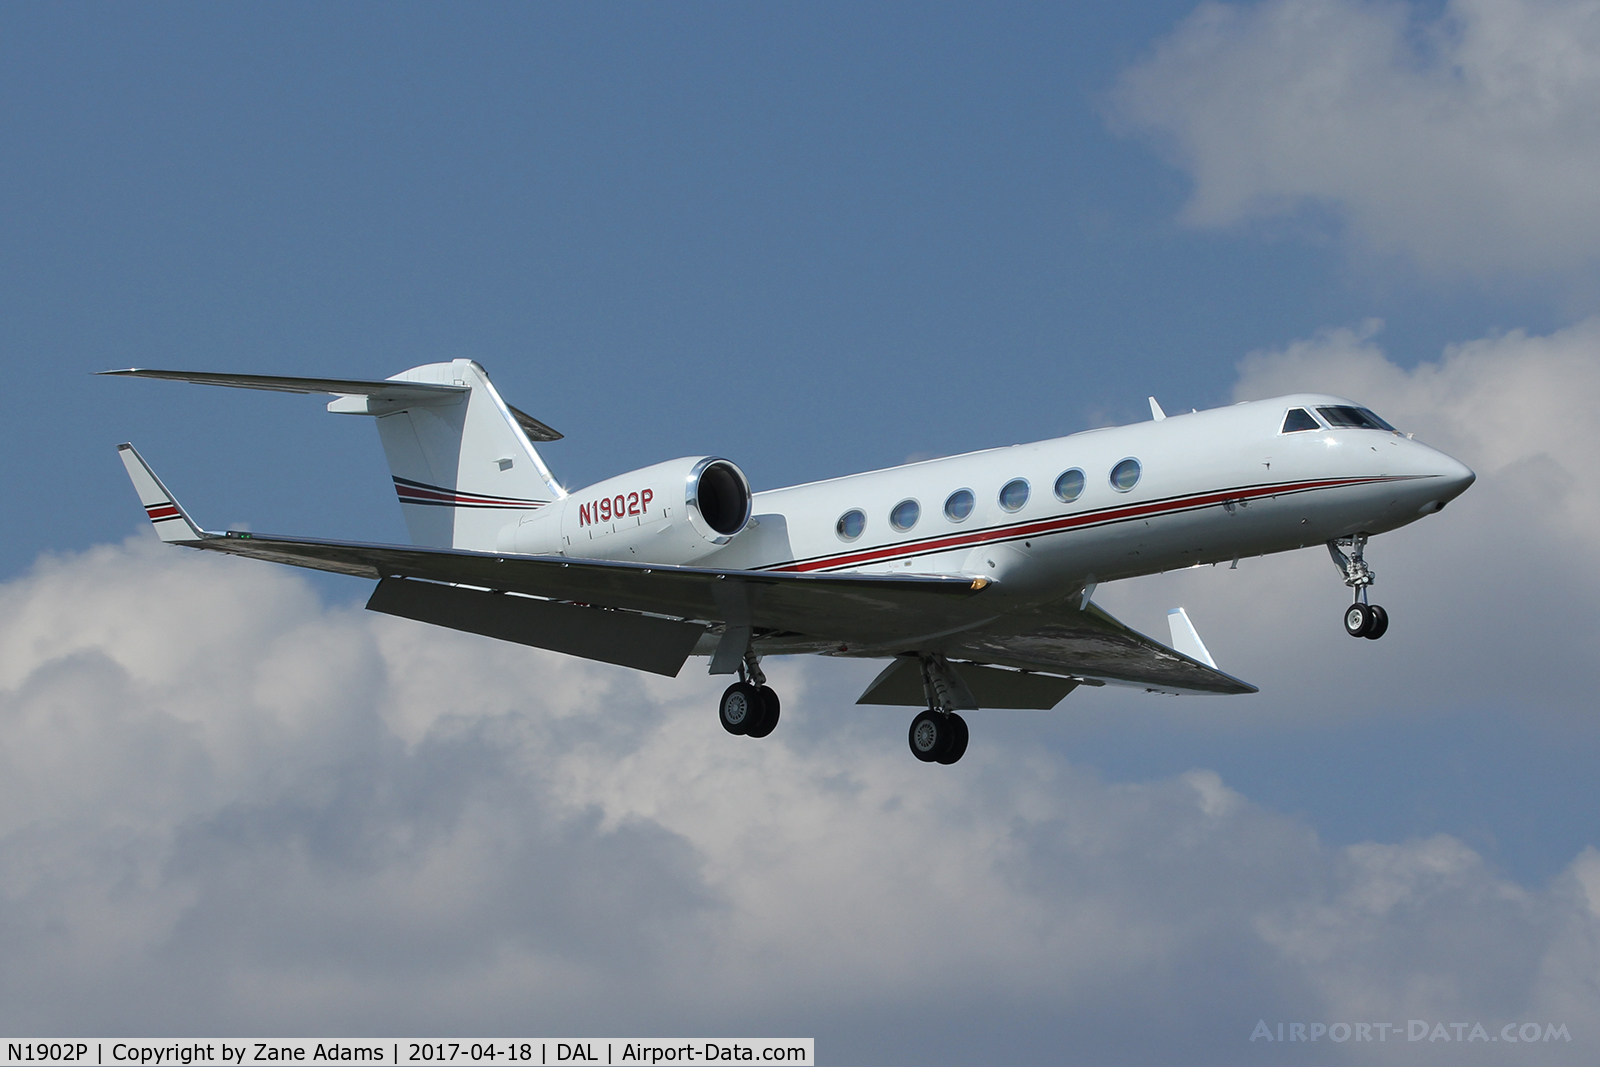 N1902P, 2010 Gulfstream Aerospace GIV-X (G450) C/N 4192, Arriving at Dallas Love Field